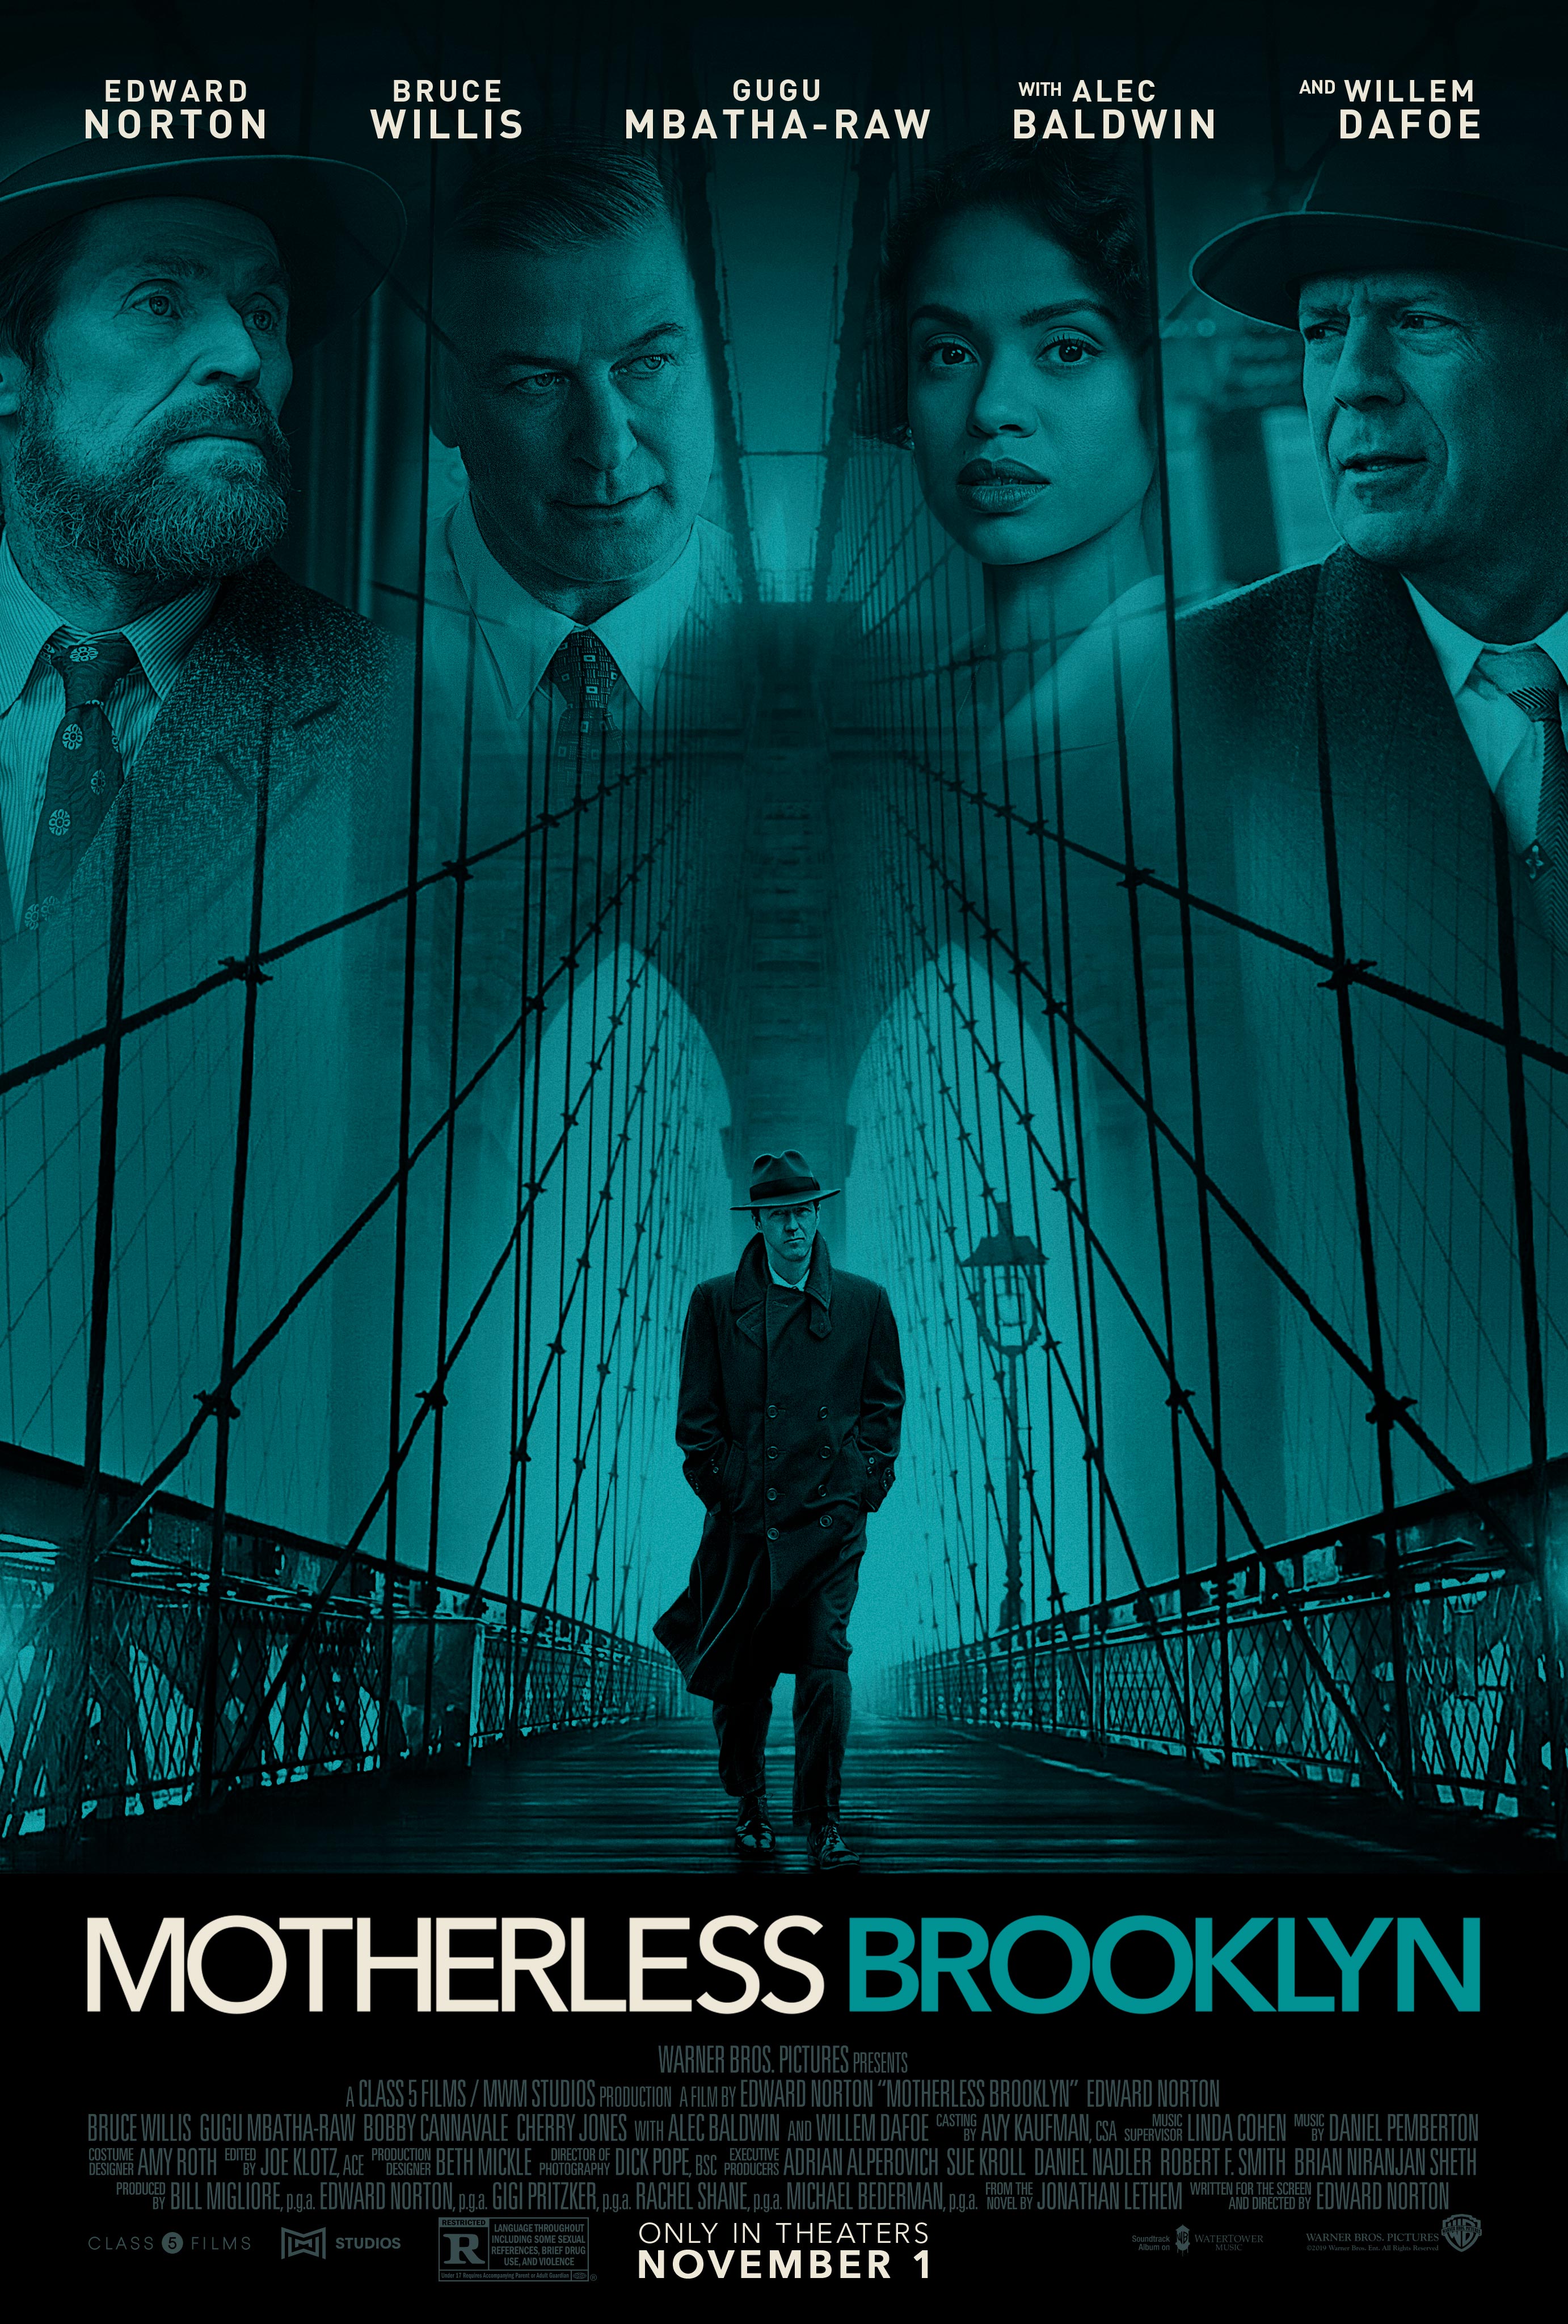 ART OF THE CUT with Oscar nominee Joe Klotz, ACE, on editing "Motherless Brooklyn" 51